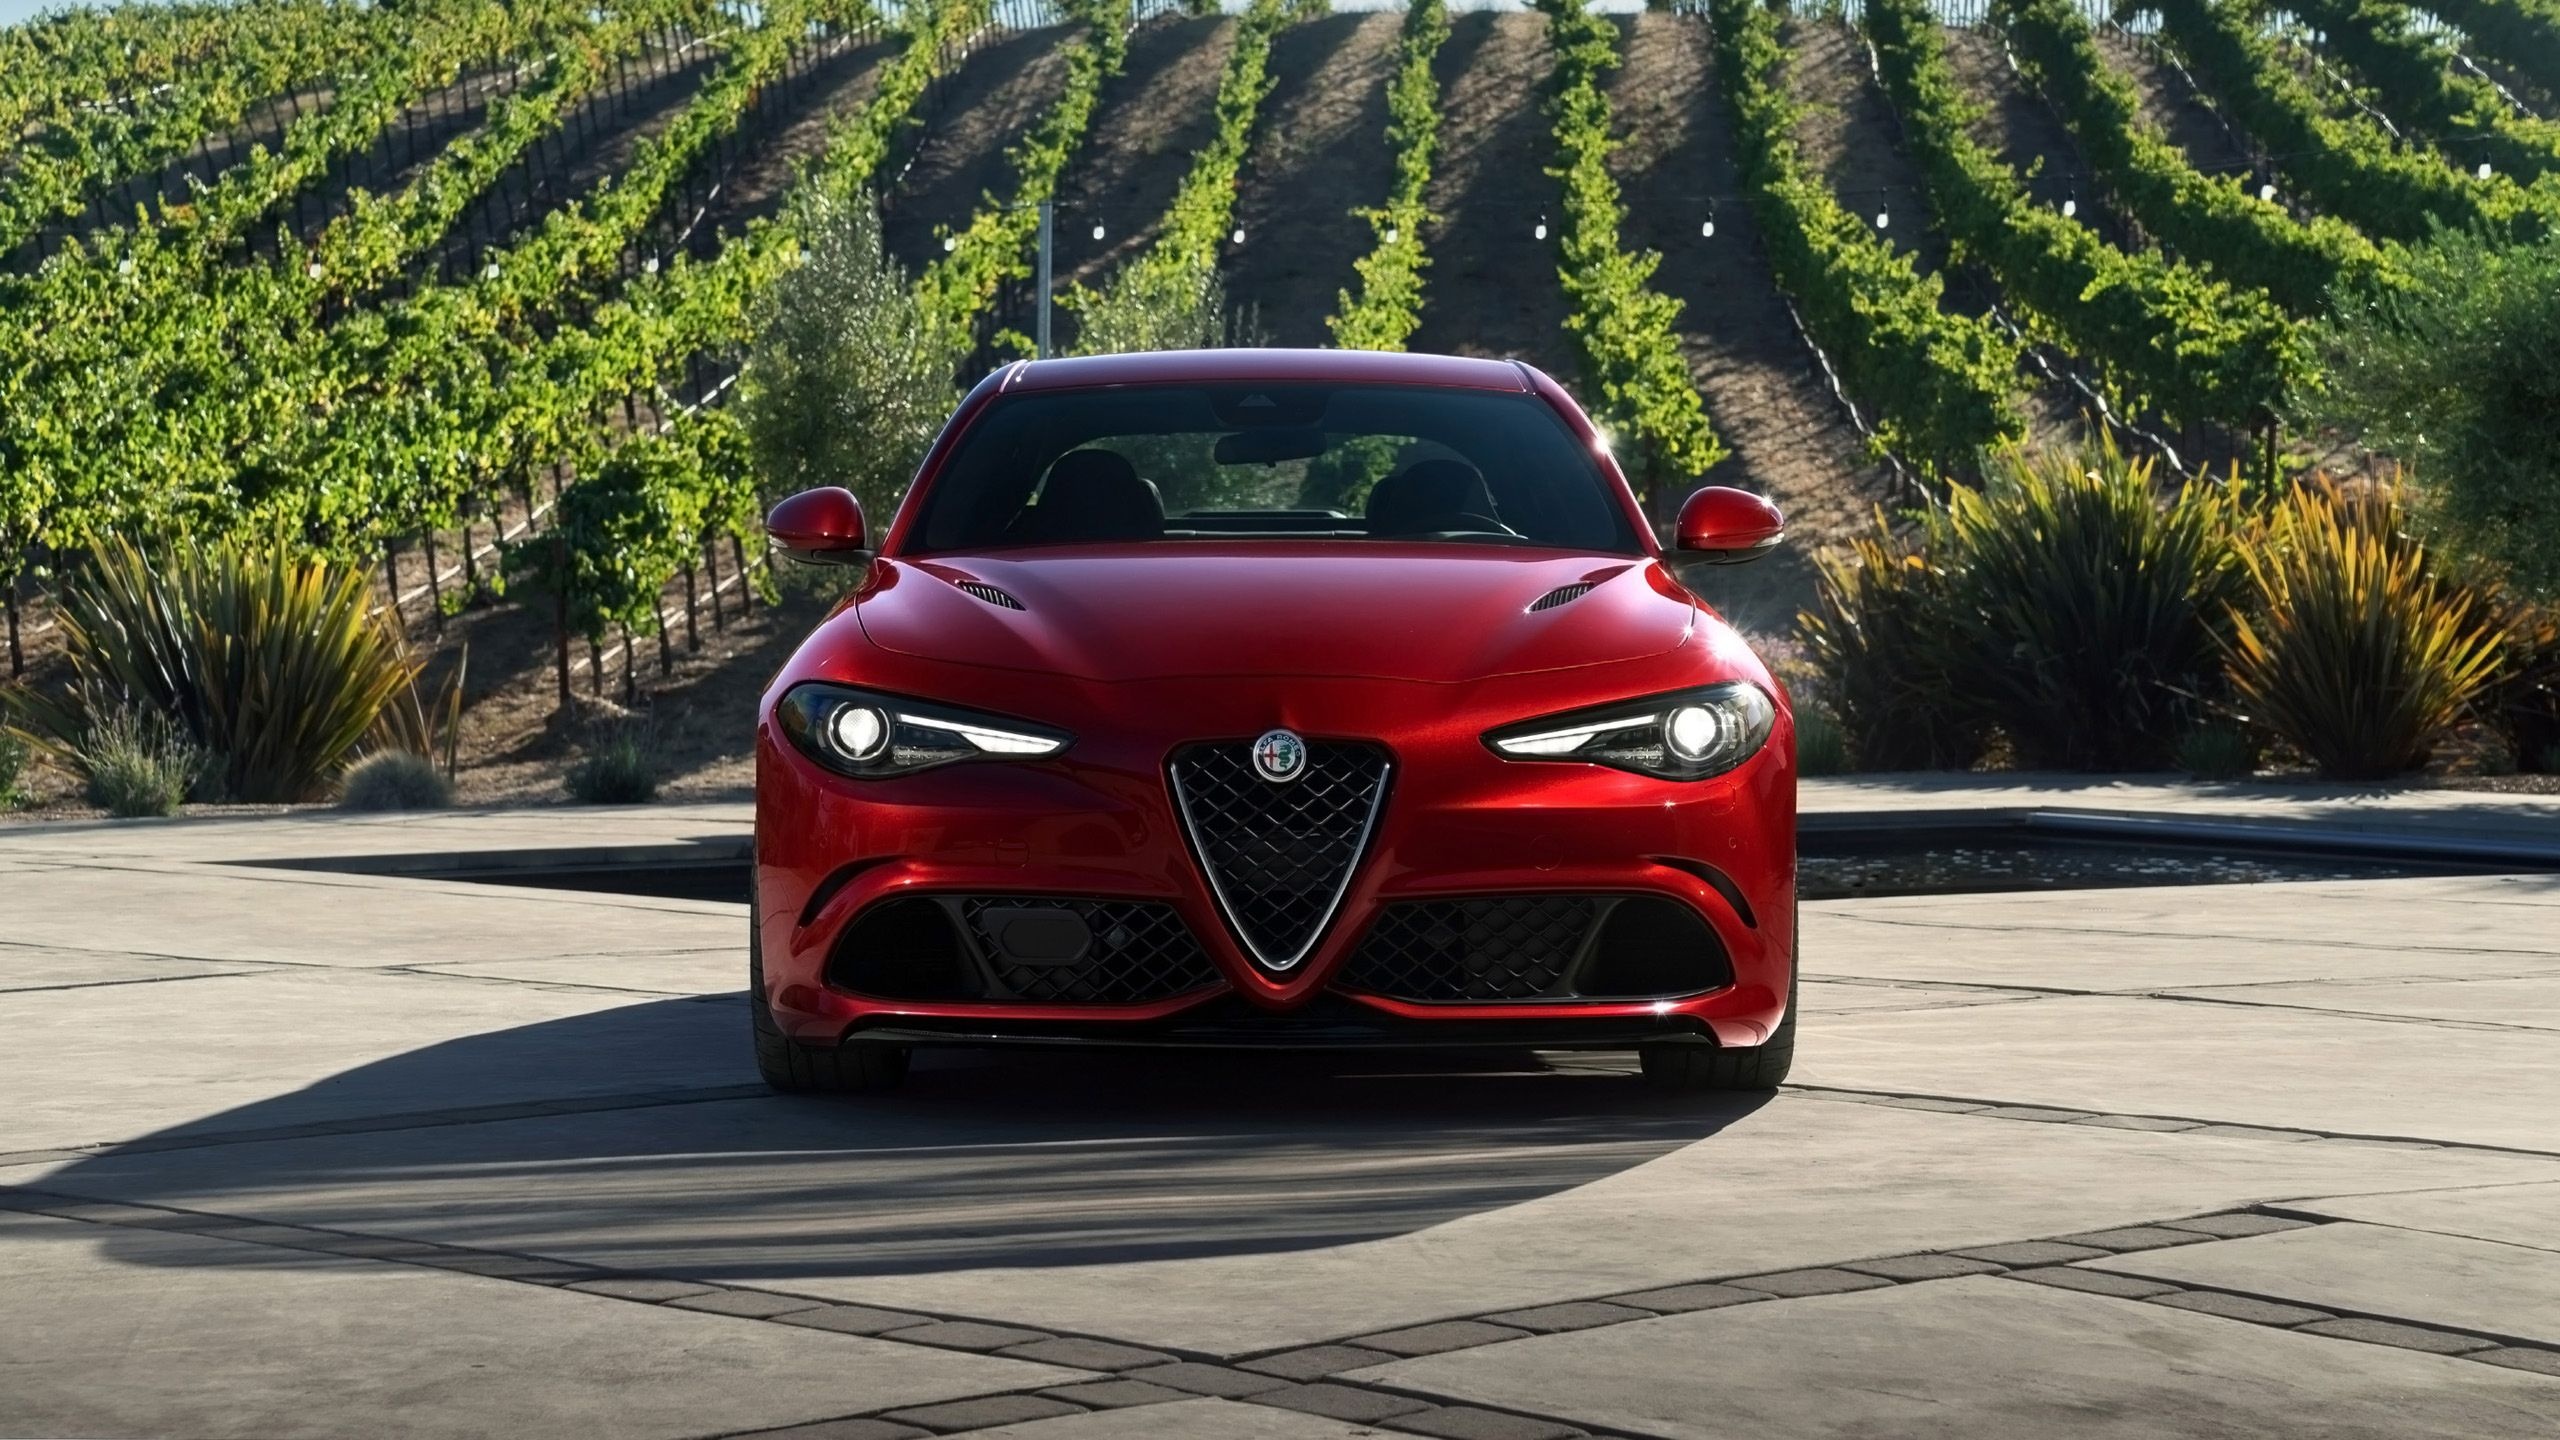 Alfa Romeo Giulia Coupe, Top free wallpapers, Backgrounds, 2560x1440 HD Desktop